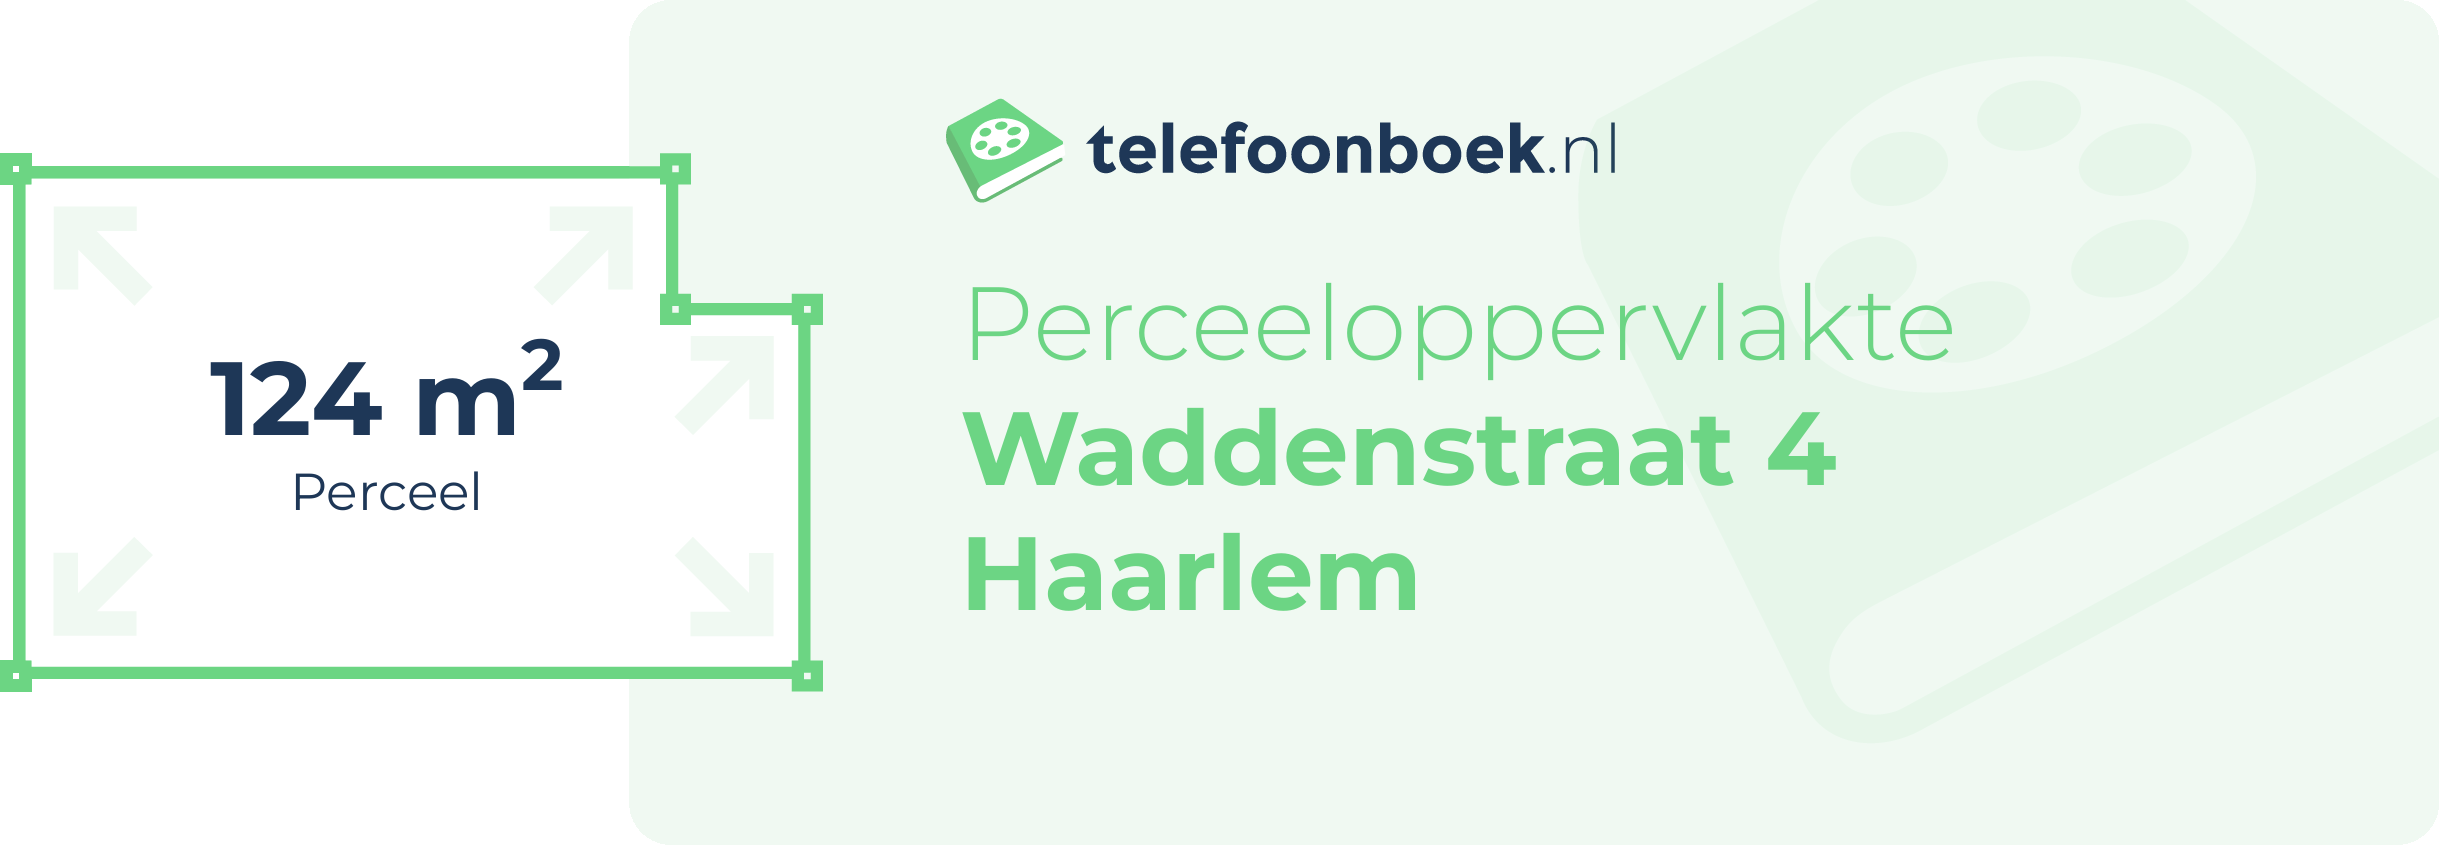 Perceeloppervlakte Waddenstraat 4 Haarlem